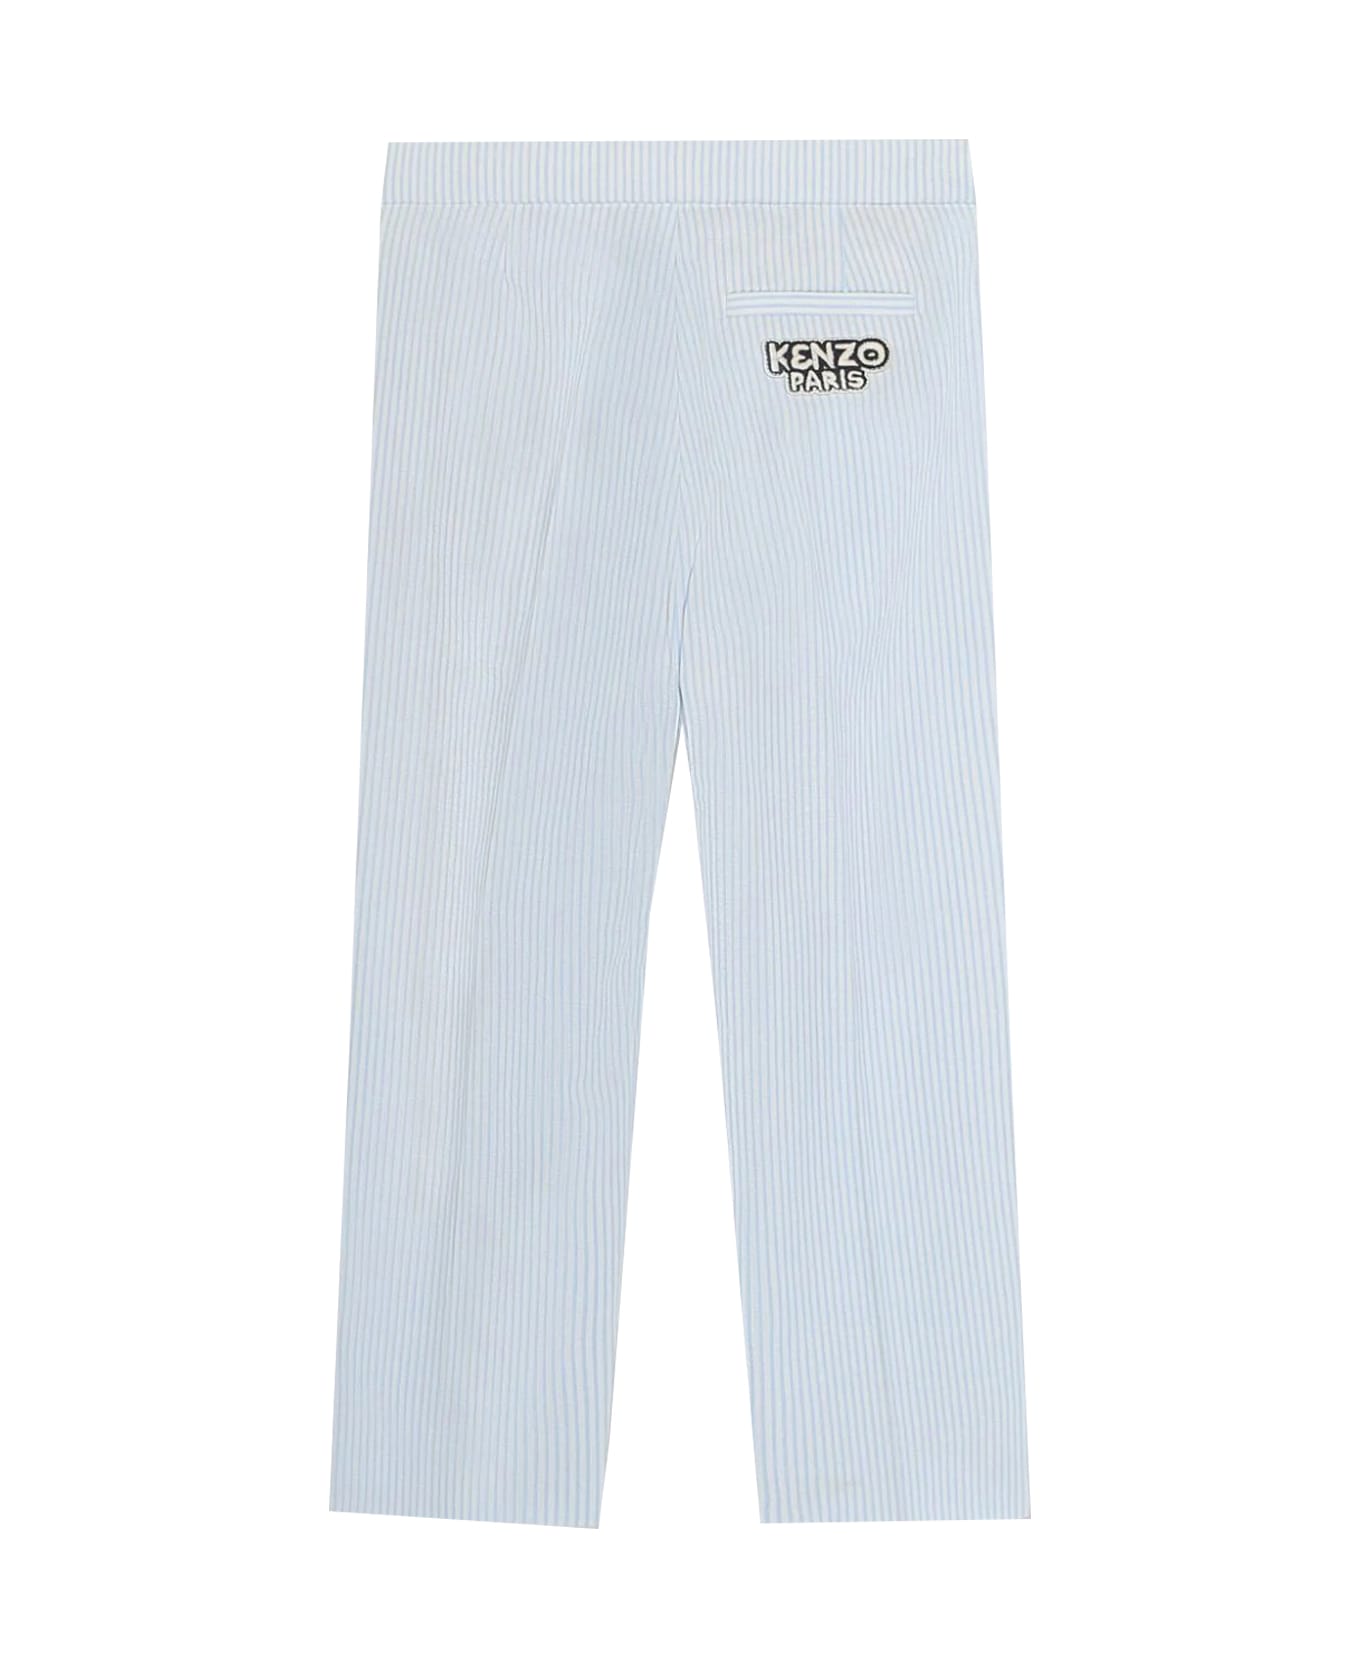 Kenzo Cotton Pants - Light blue